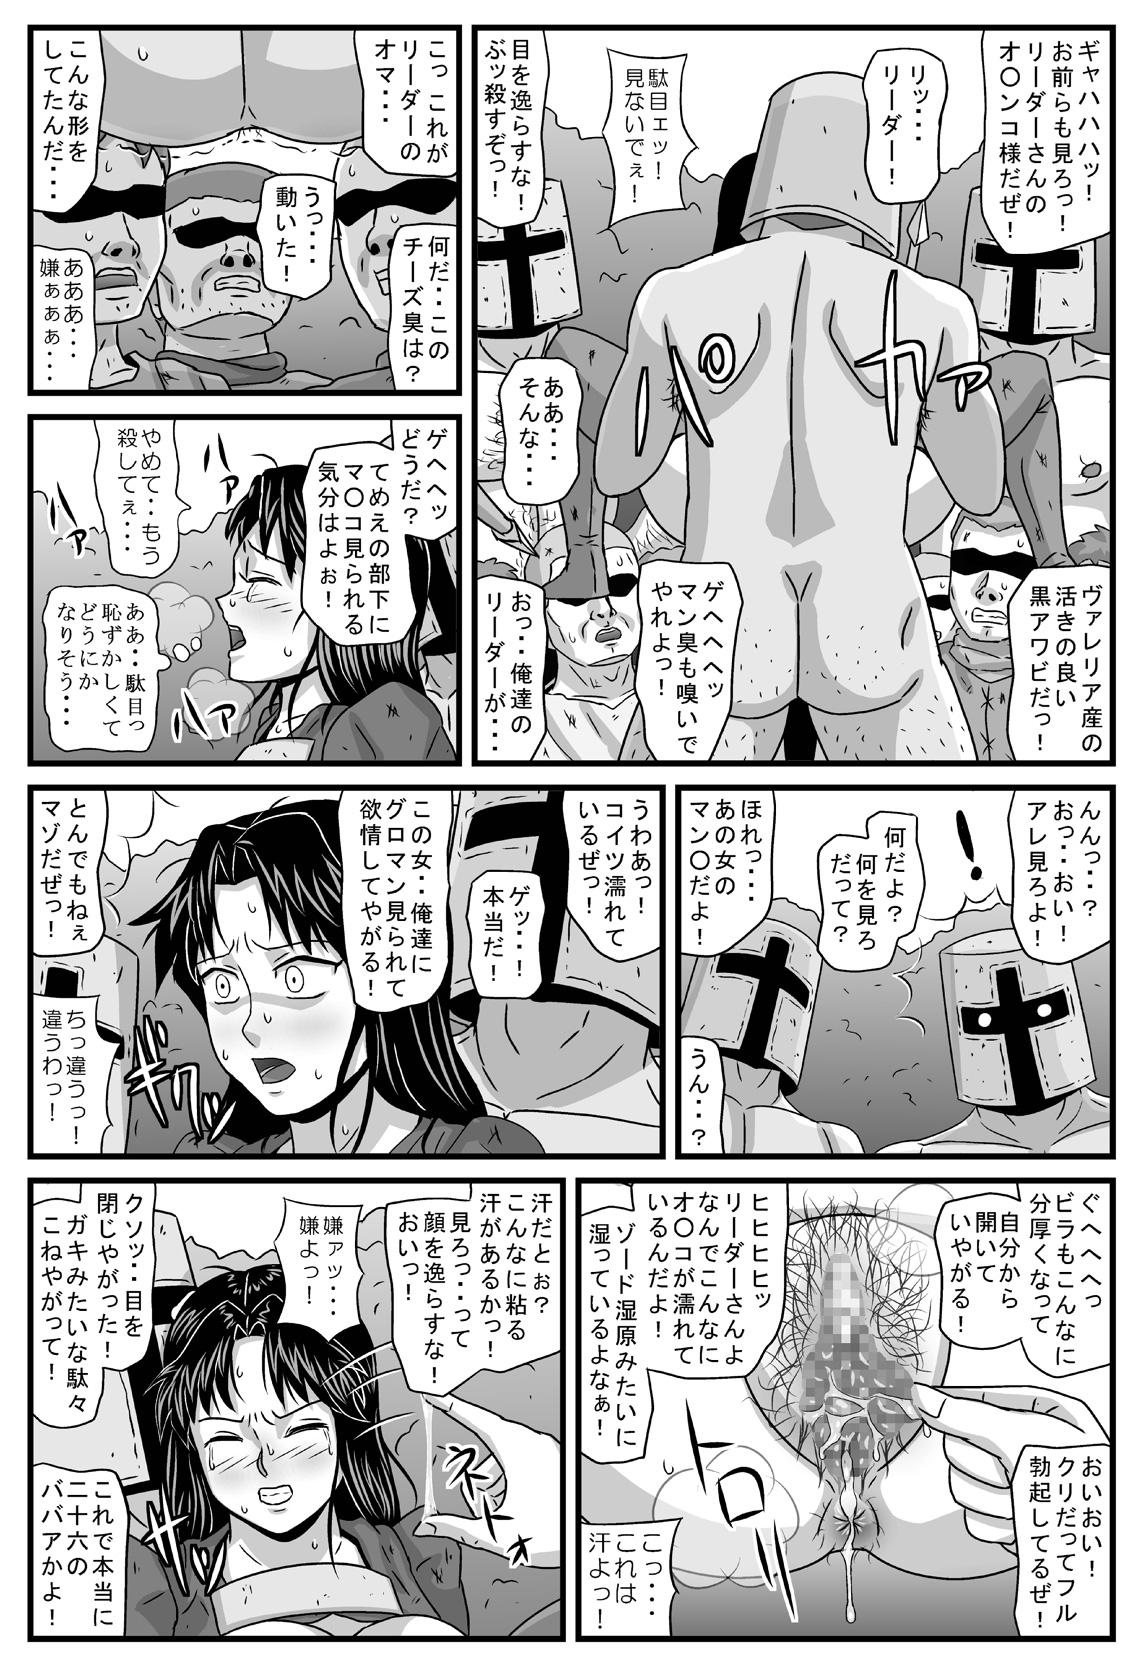 Fat Guerrilla no Onna Leader wa Honoo no 26-sai Kurokami Shojo - Tactics ogre Penis Sucking - Page 8